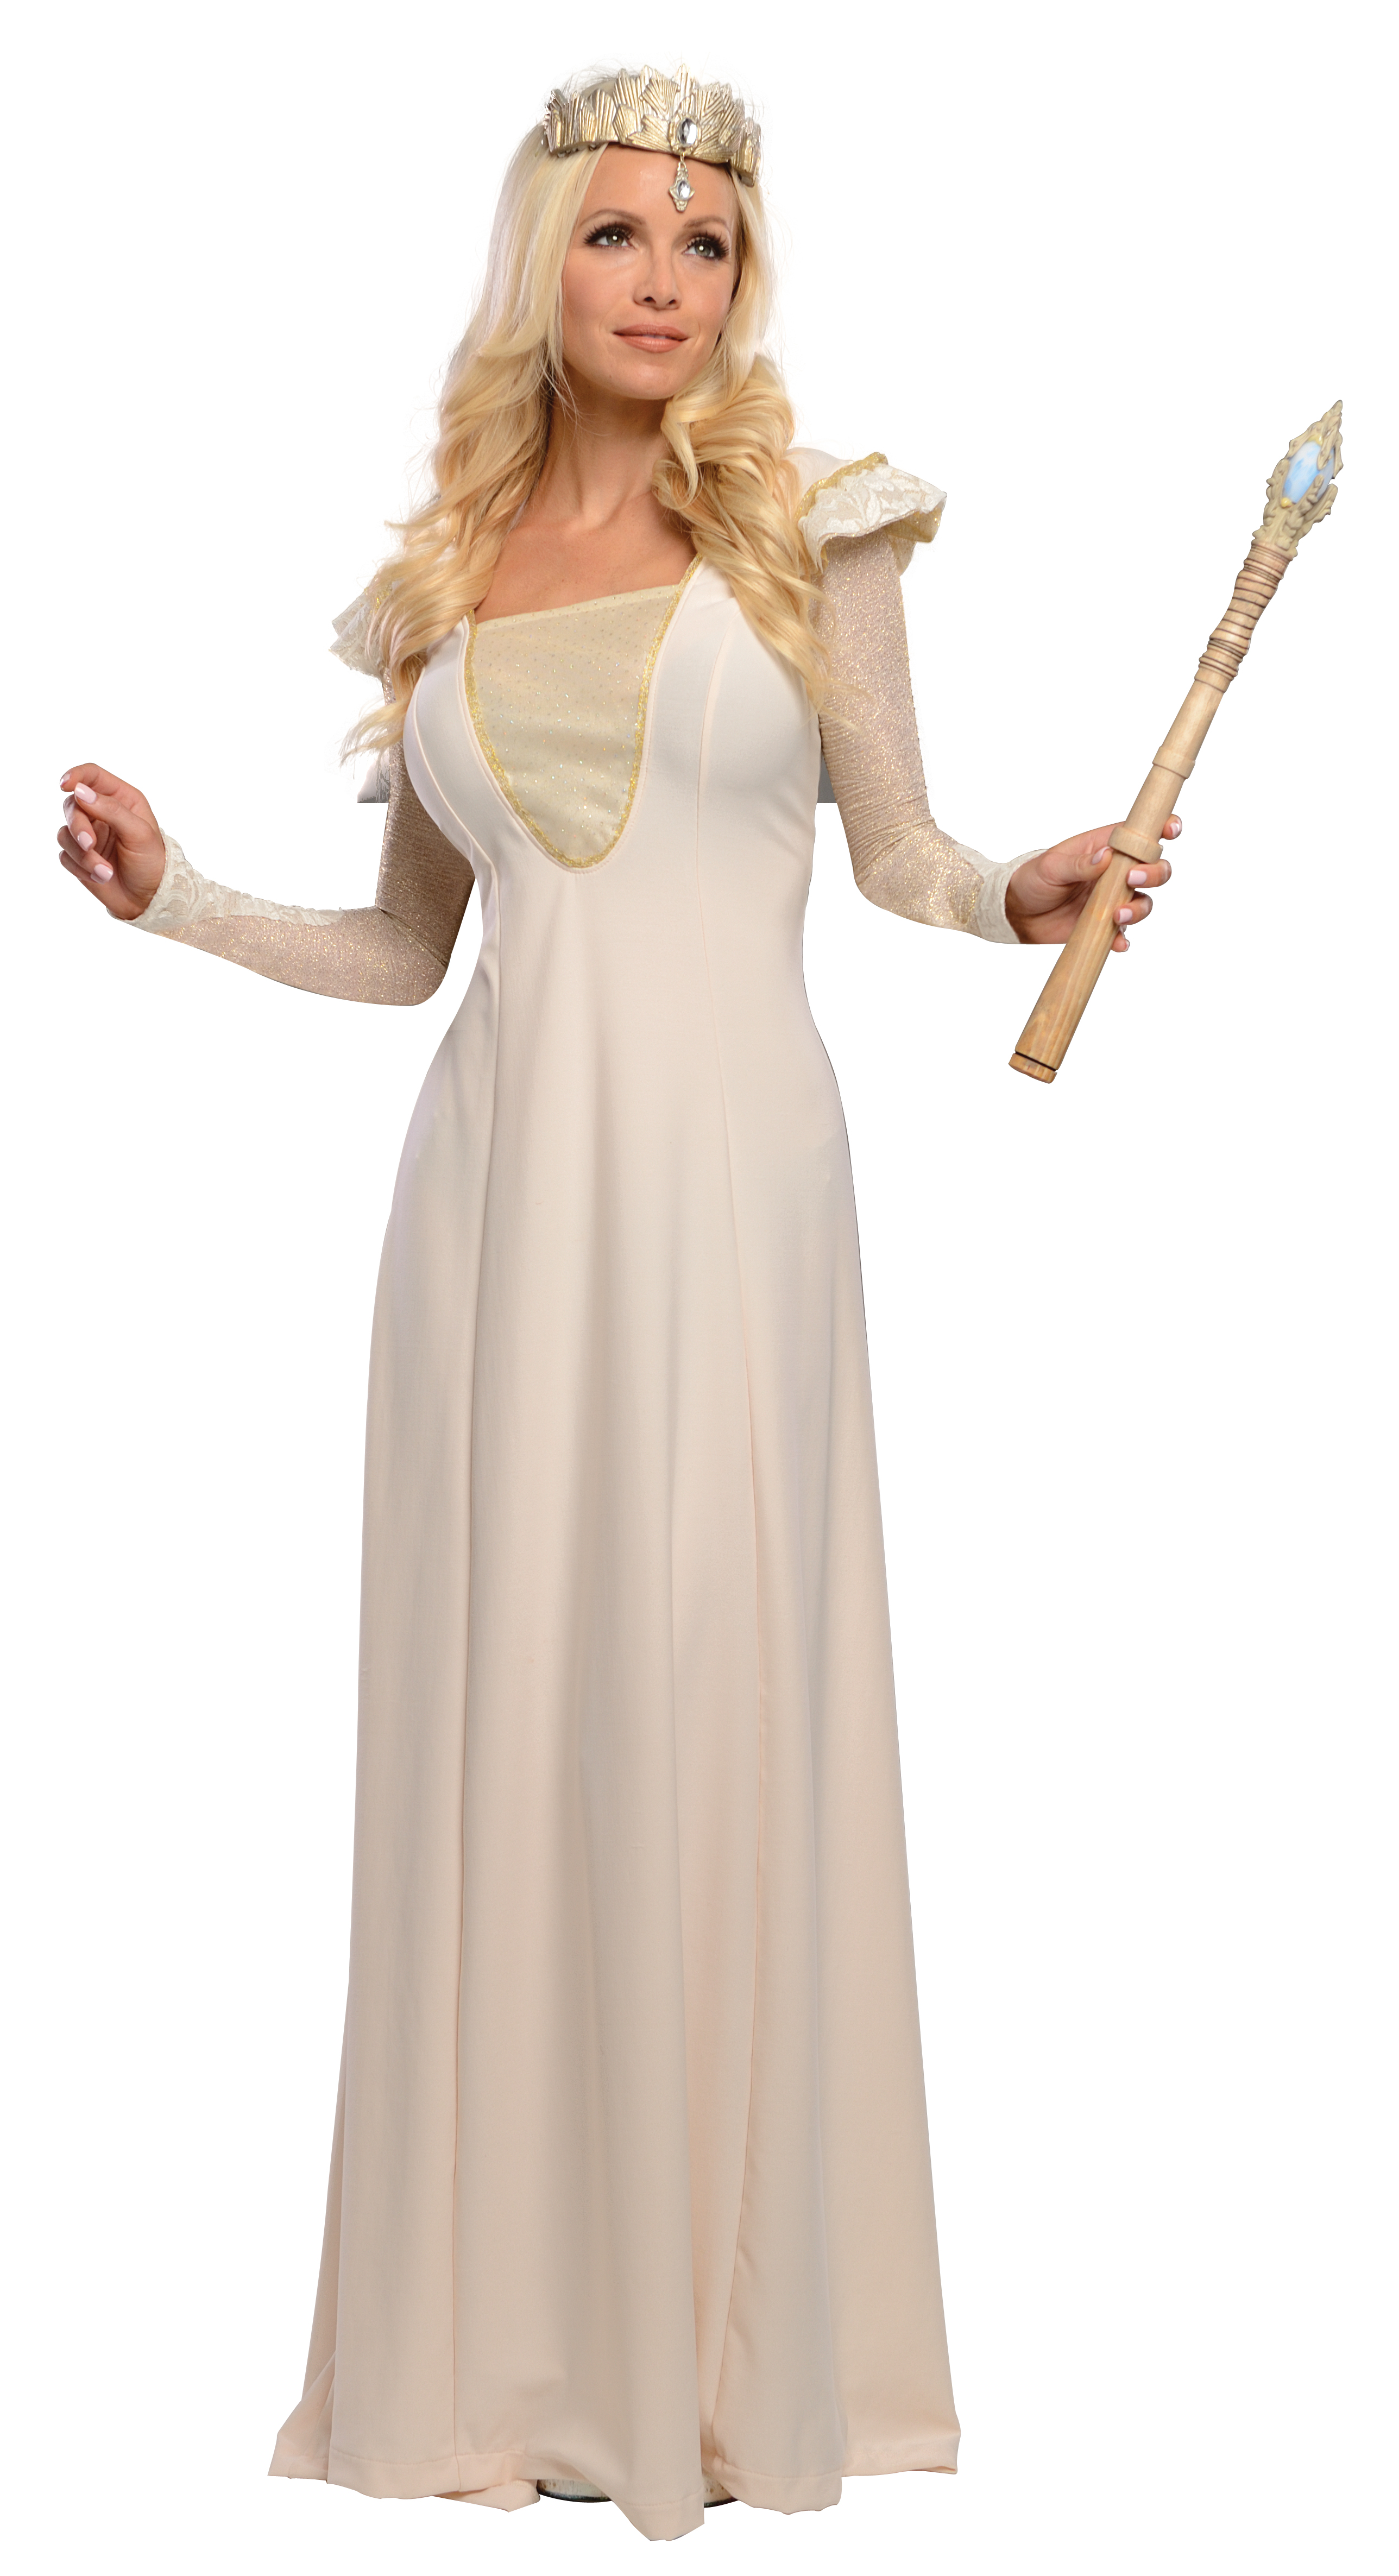 Glinda DELUXE Adult Costume - Click Image to Close